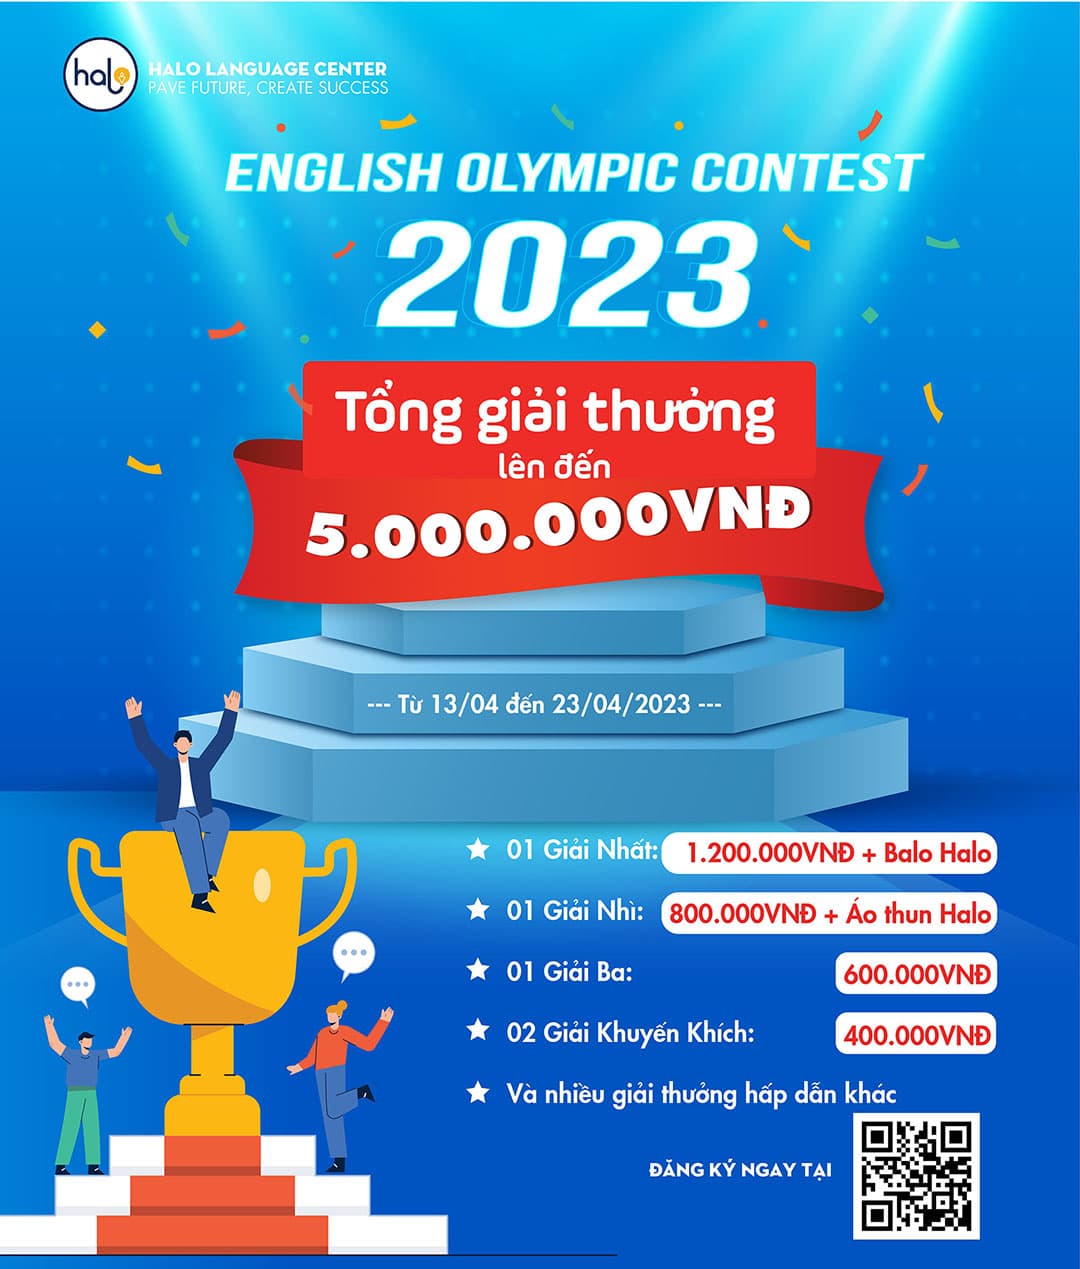 Cuộc thi “ENGLISH OLYMPIC CONTEST 2023” do Halo tổ chức